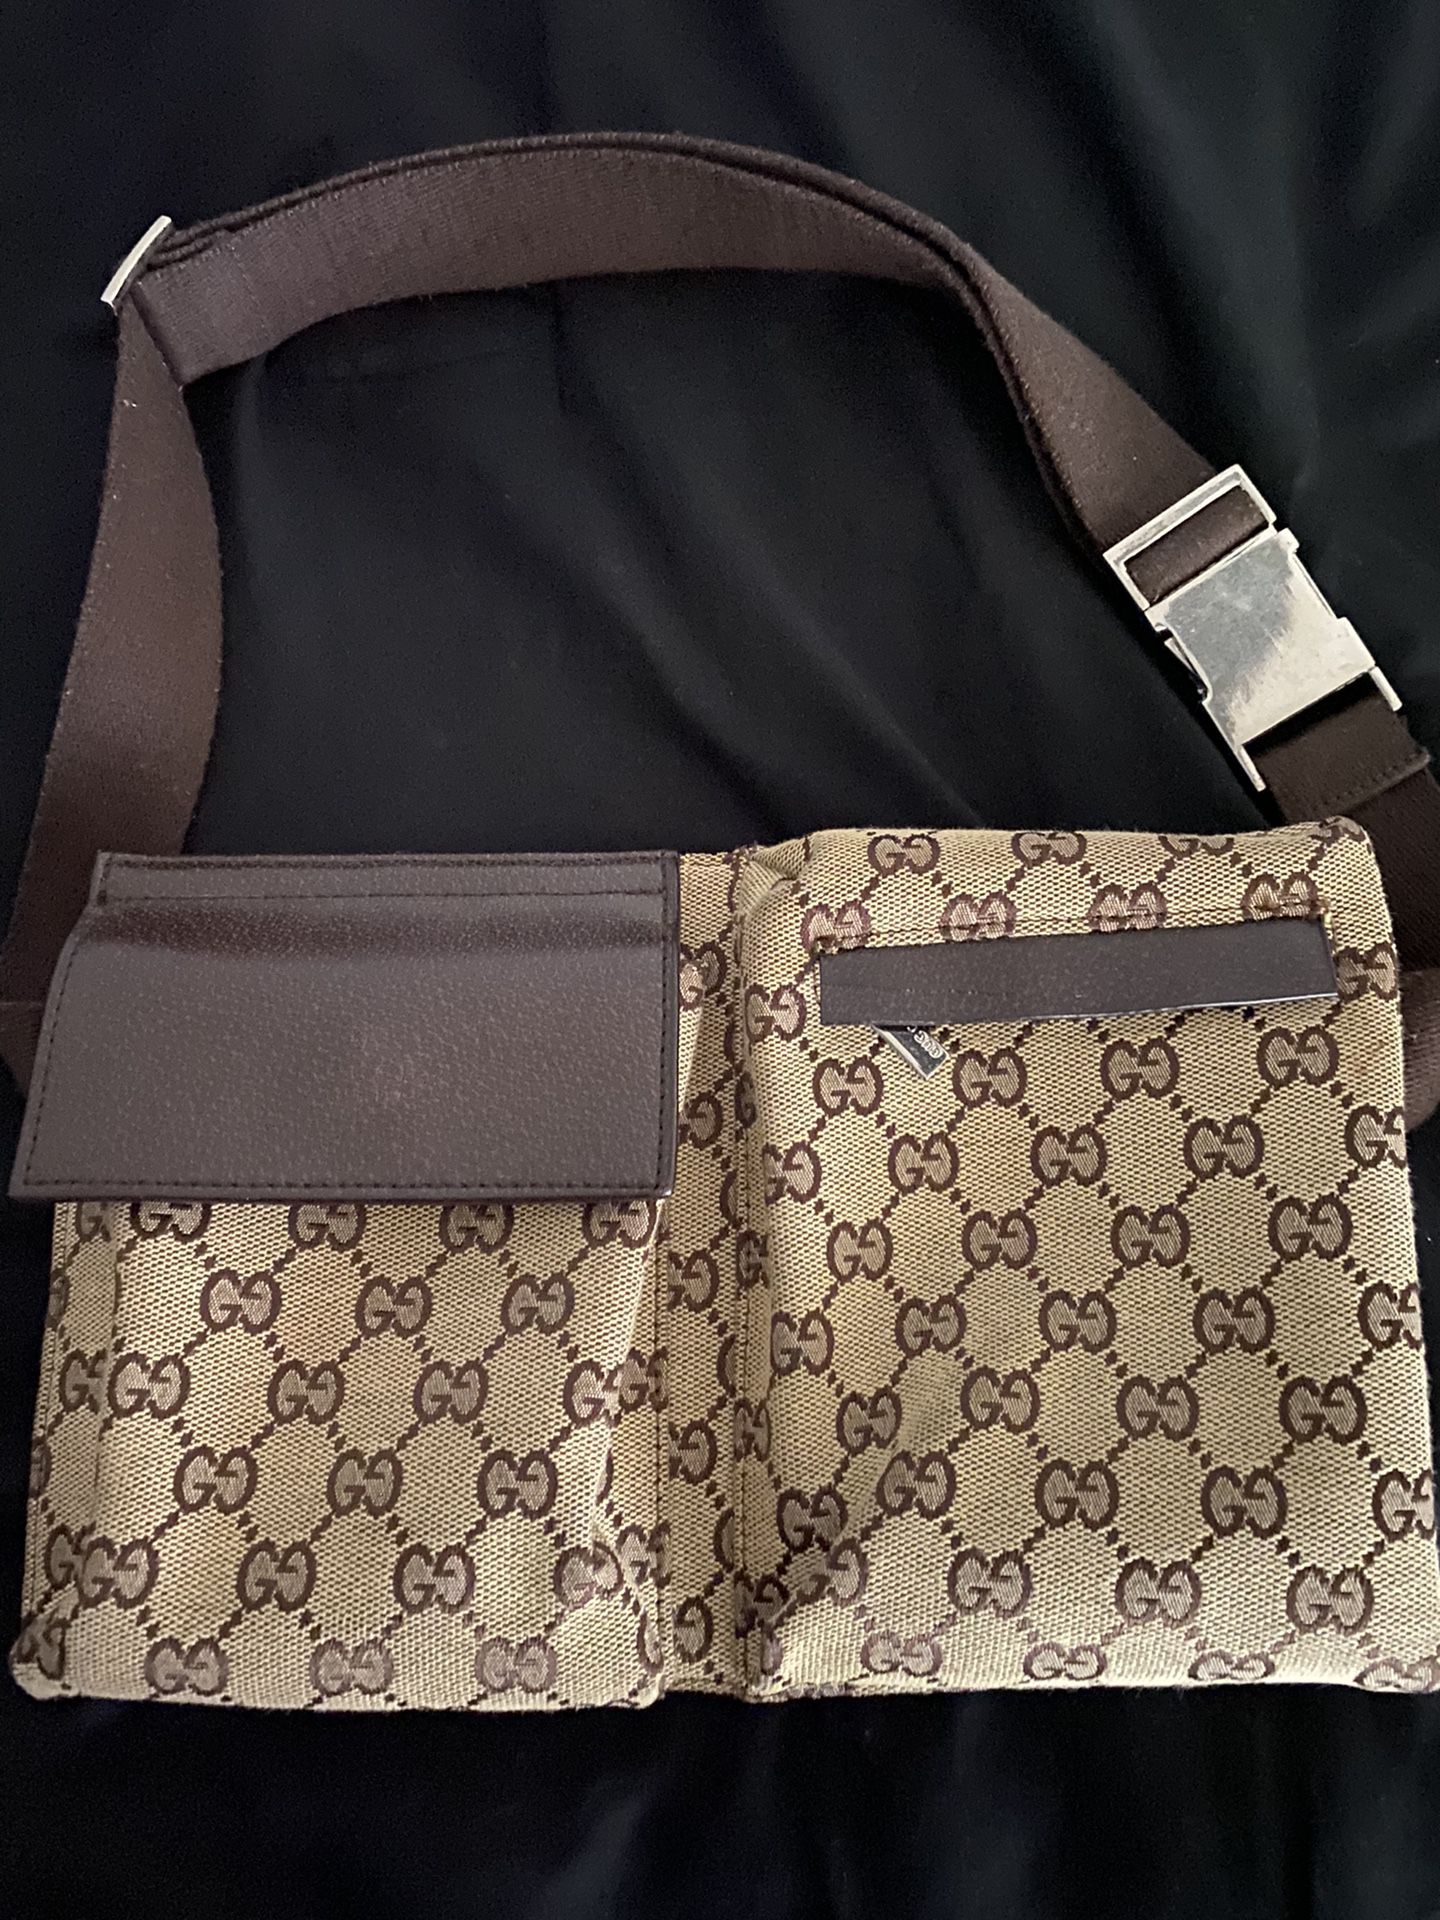 Gucci side bag